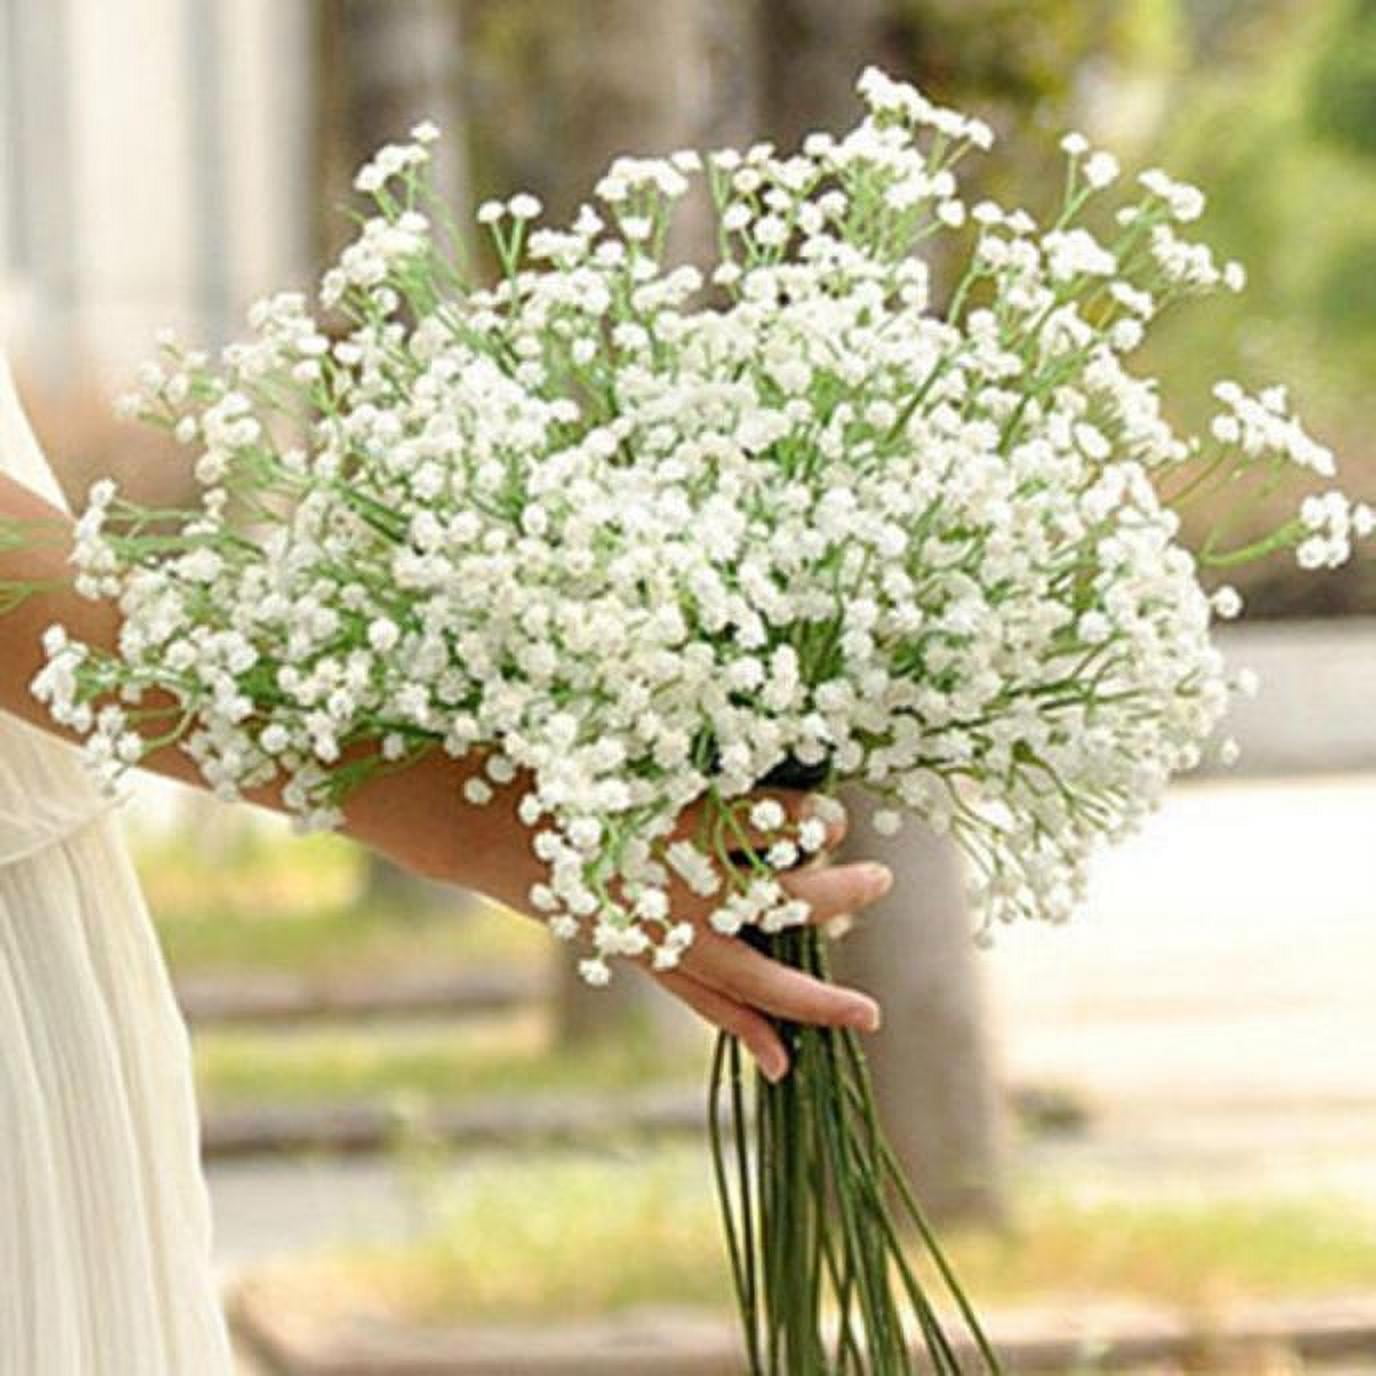 Bridal 3 Heads Silk Flowers Peony Flower Garden Home Wedding Party Decor DIY New 